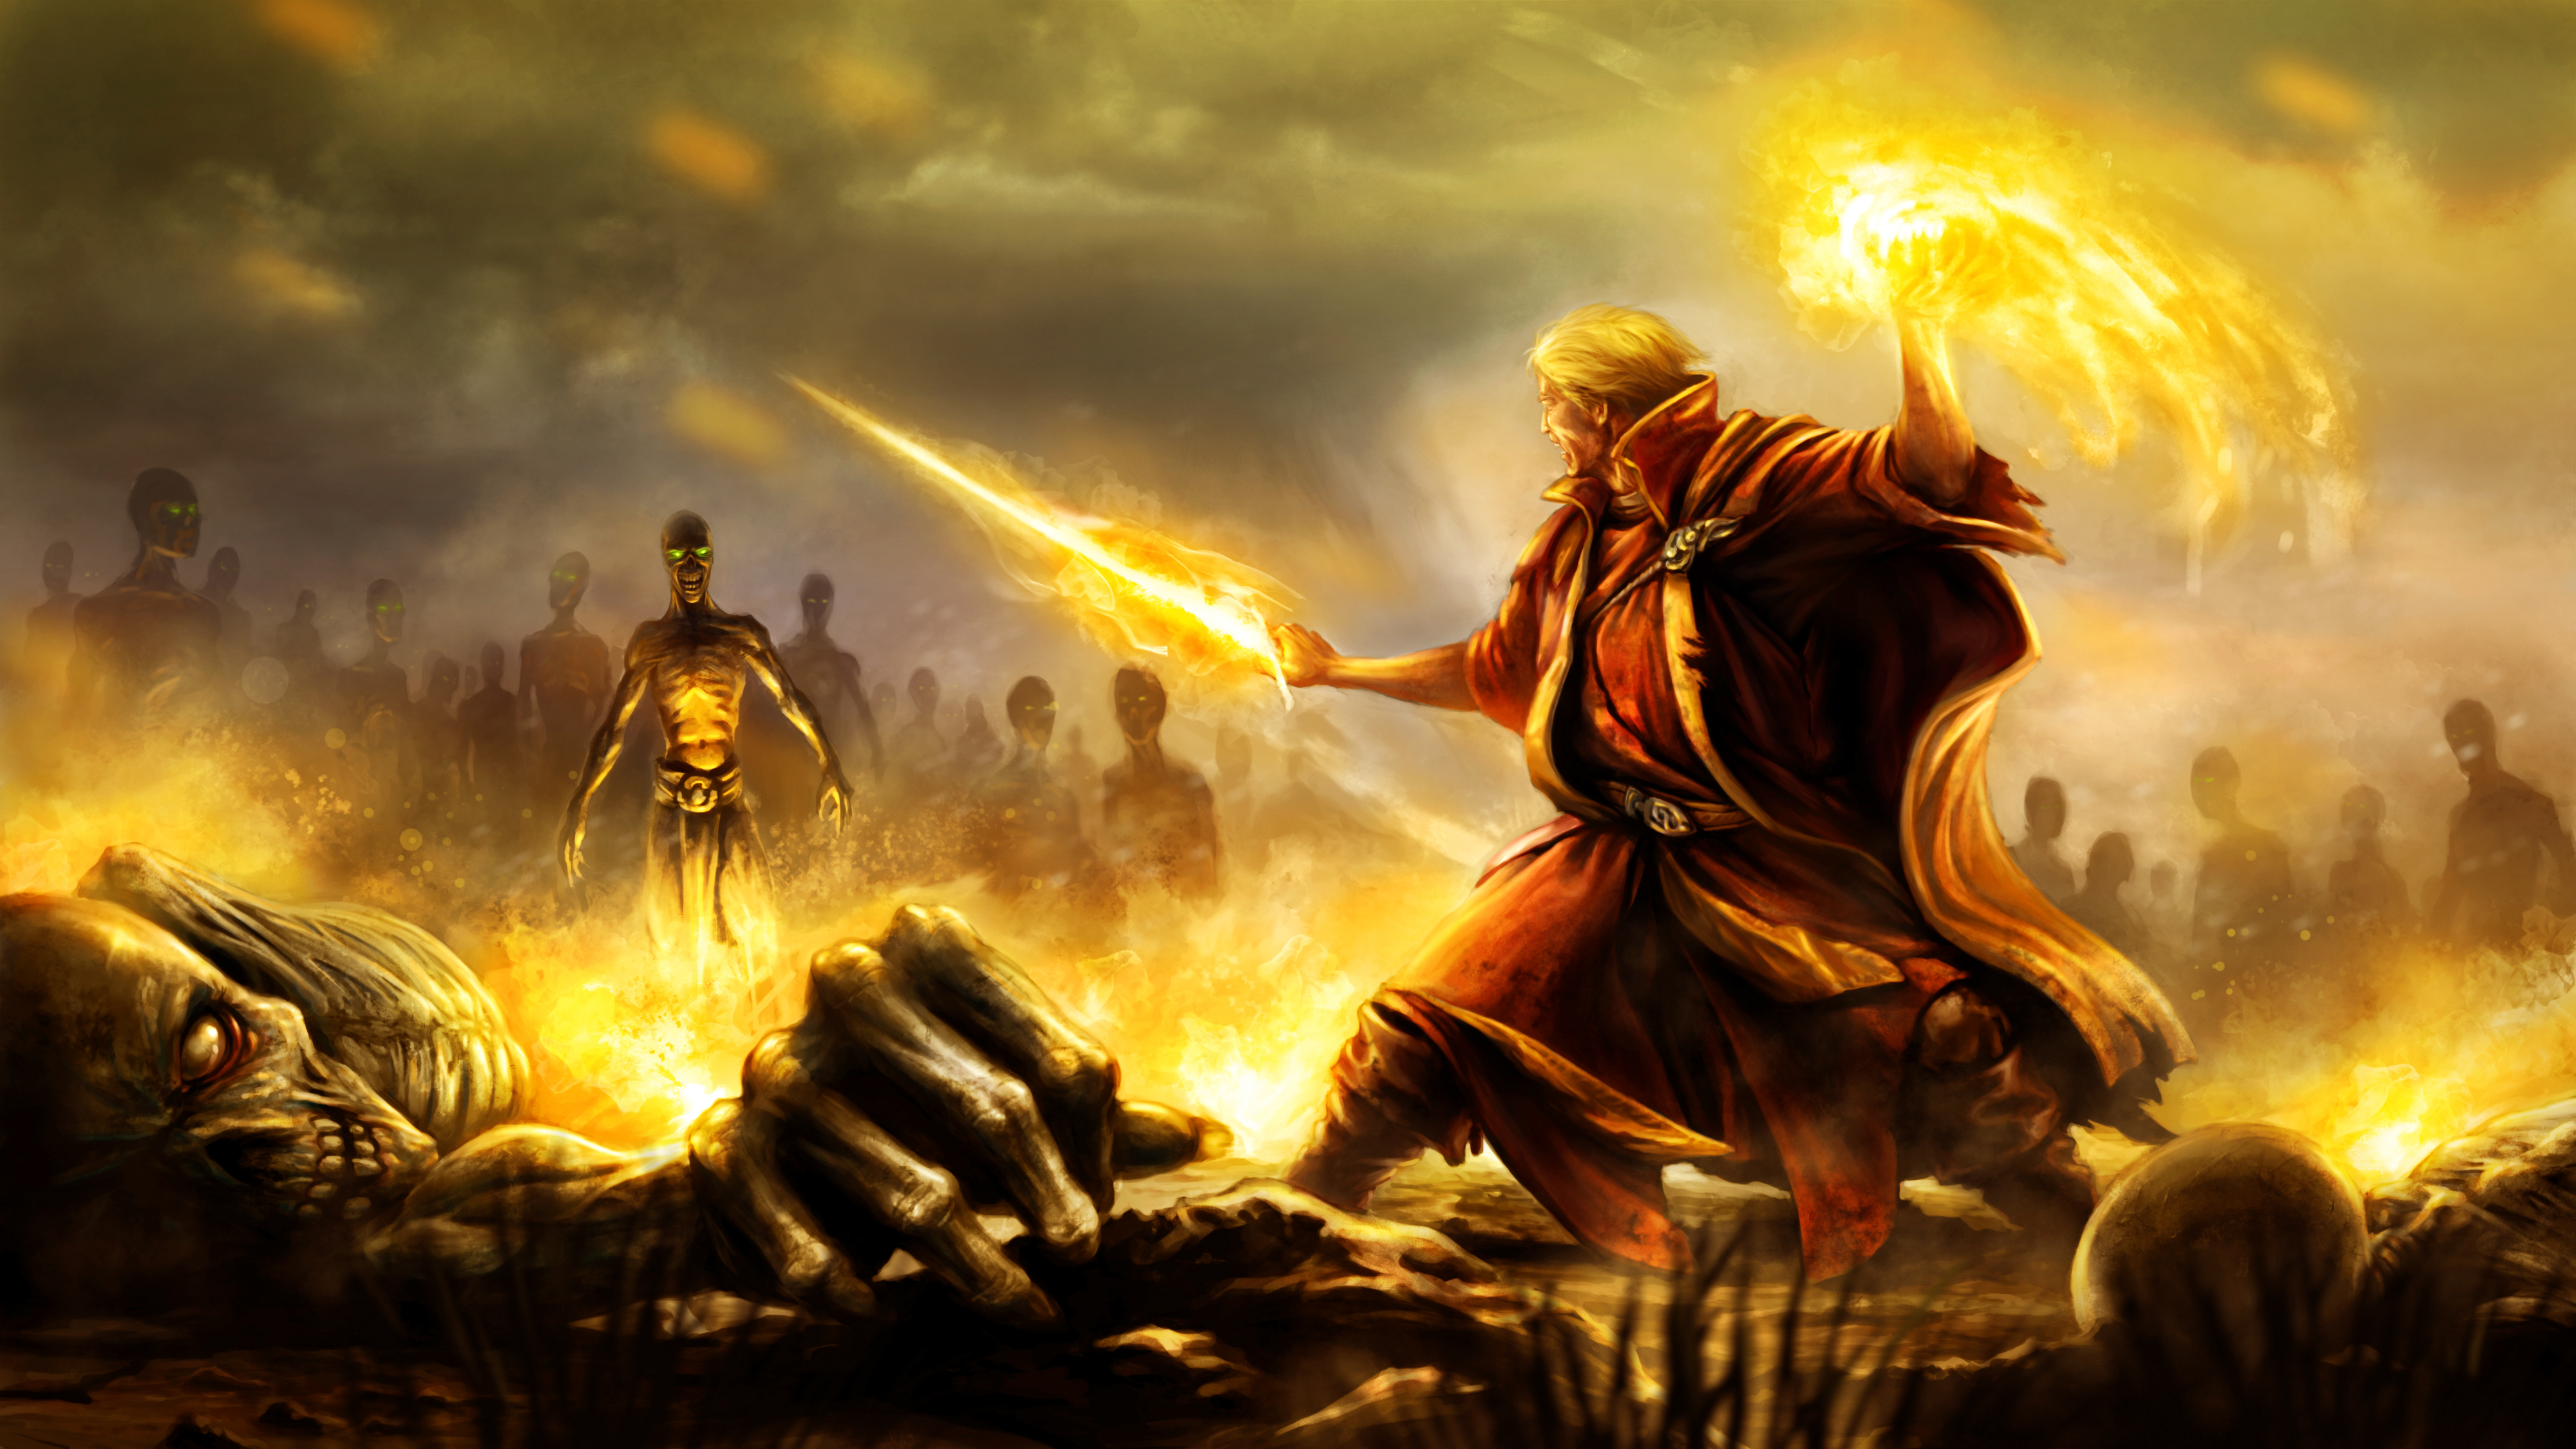 Battle Magic Man Sorcerer Sword Undead Zombie 4000x2250